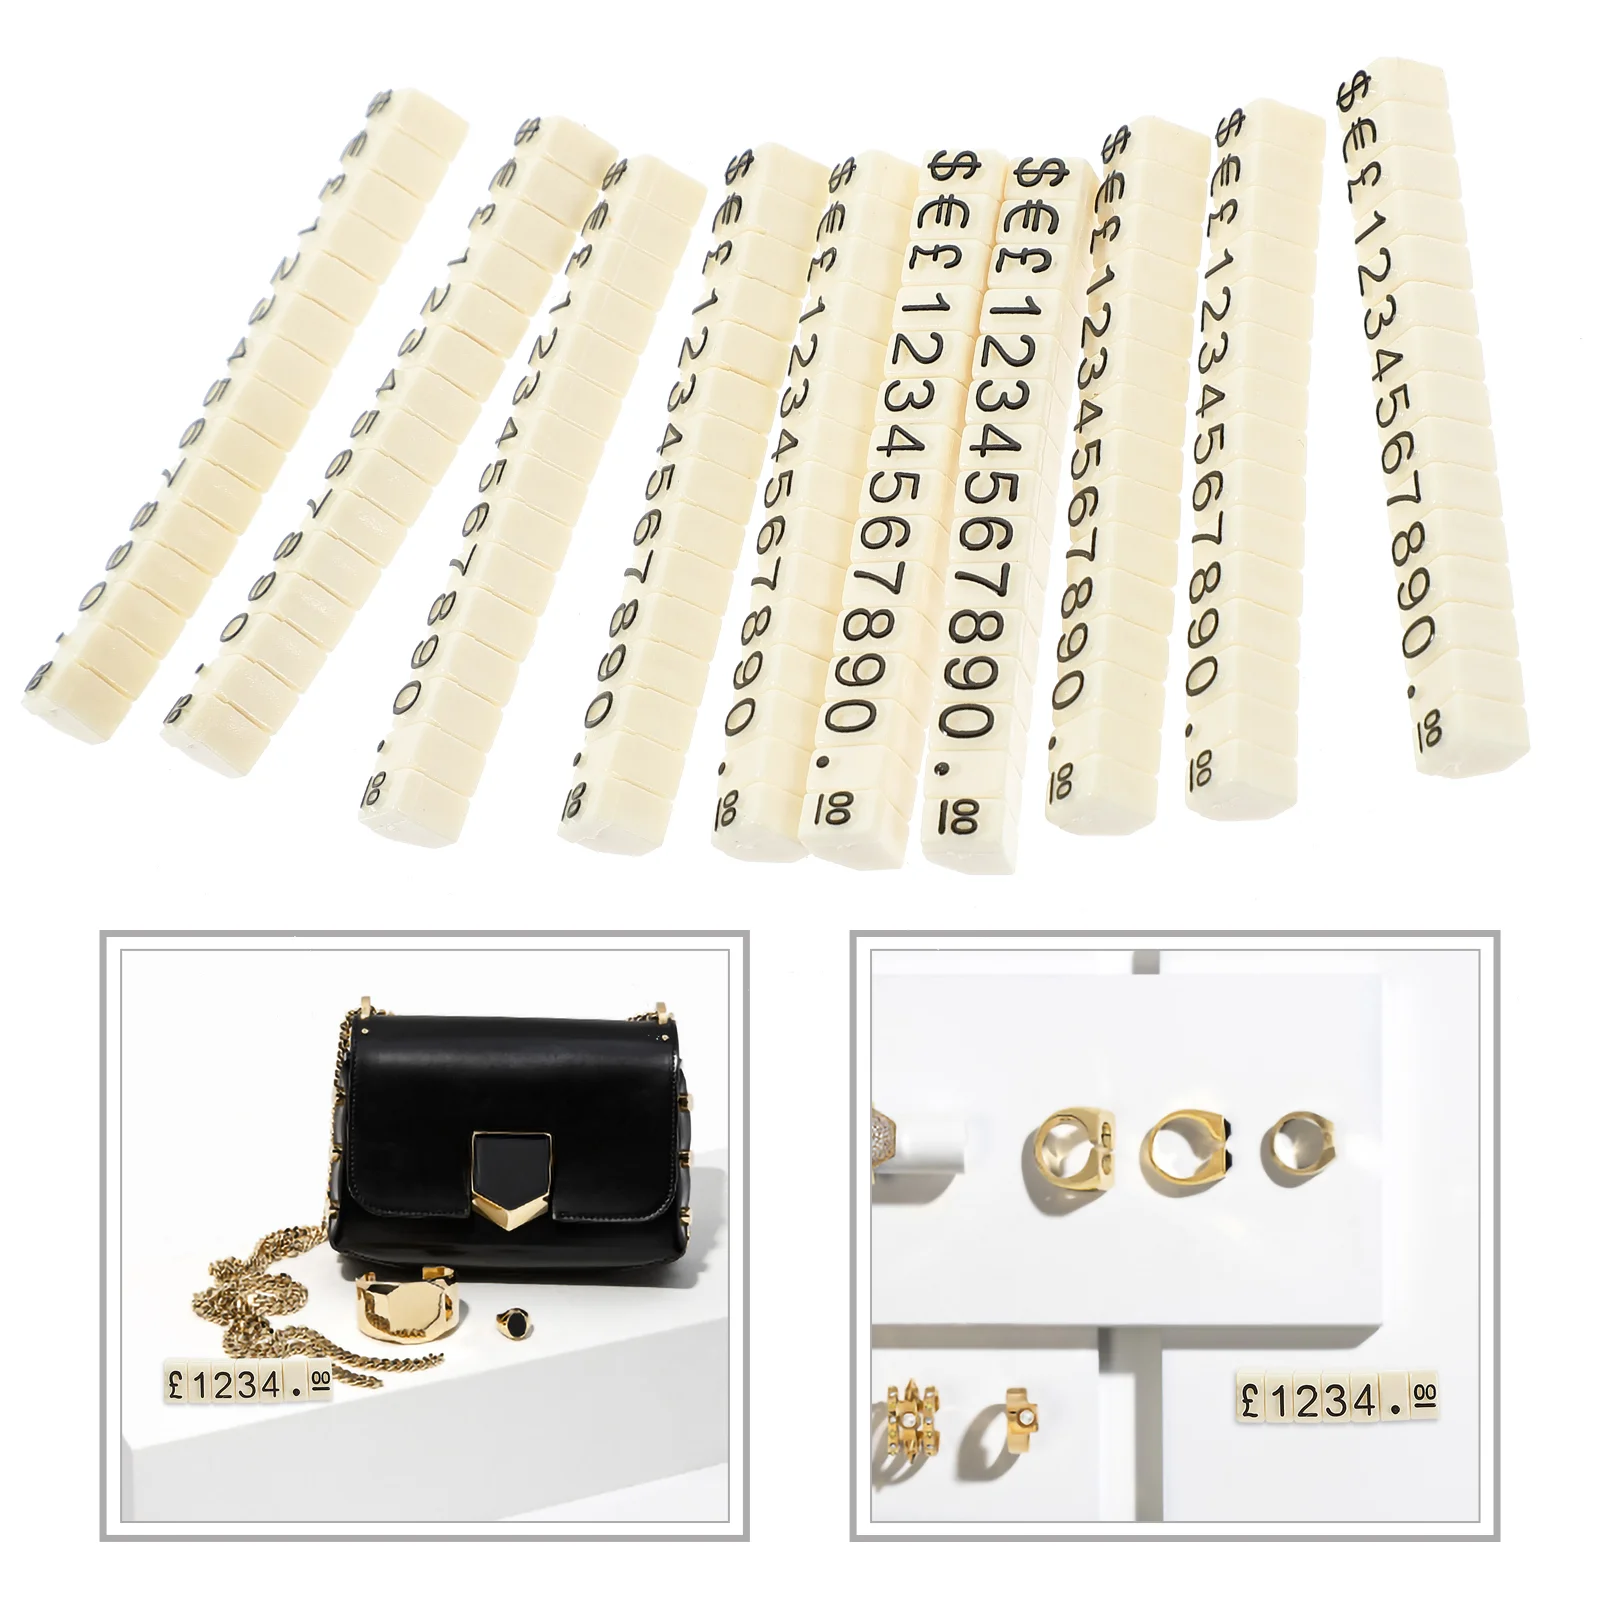 

20 Pcs Price Tag Adjustable Digital Watch Collage Tags Cube Jewelry Plastic Blocks Alphabet Tabs